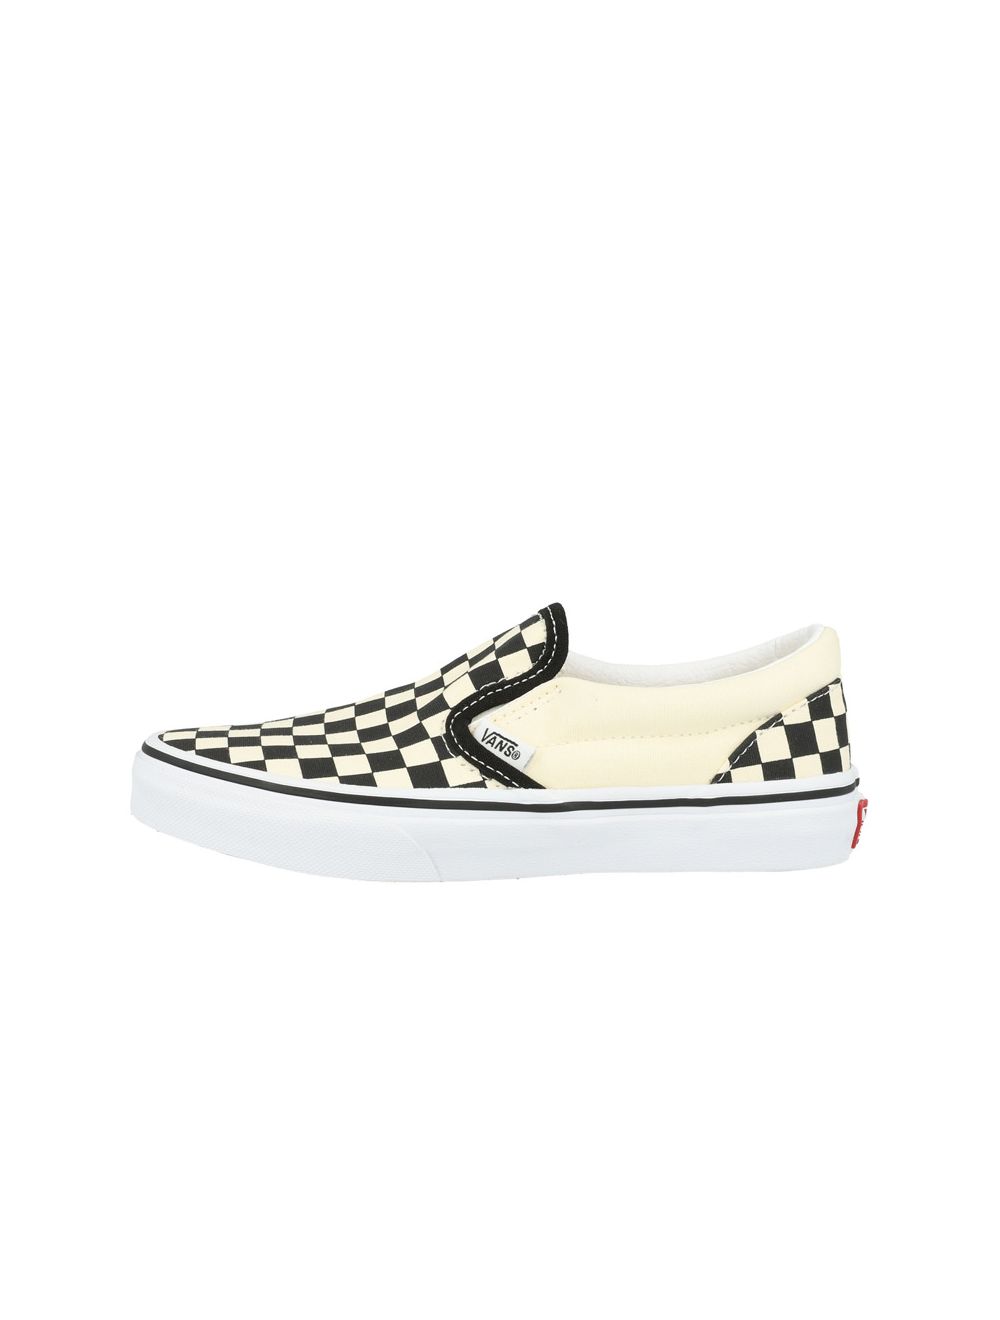 Shop Vans Classic Slip-On Checkerboard Kids Sneaker White Black